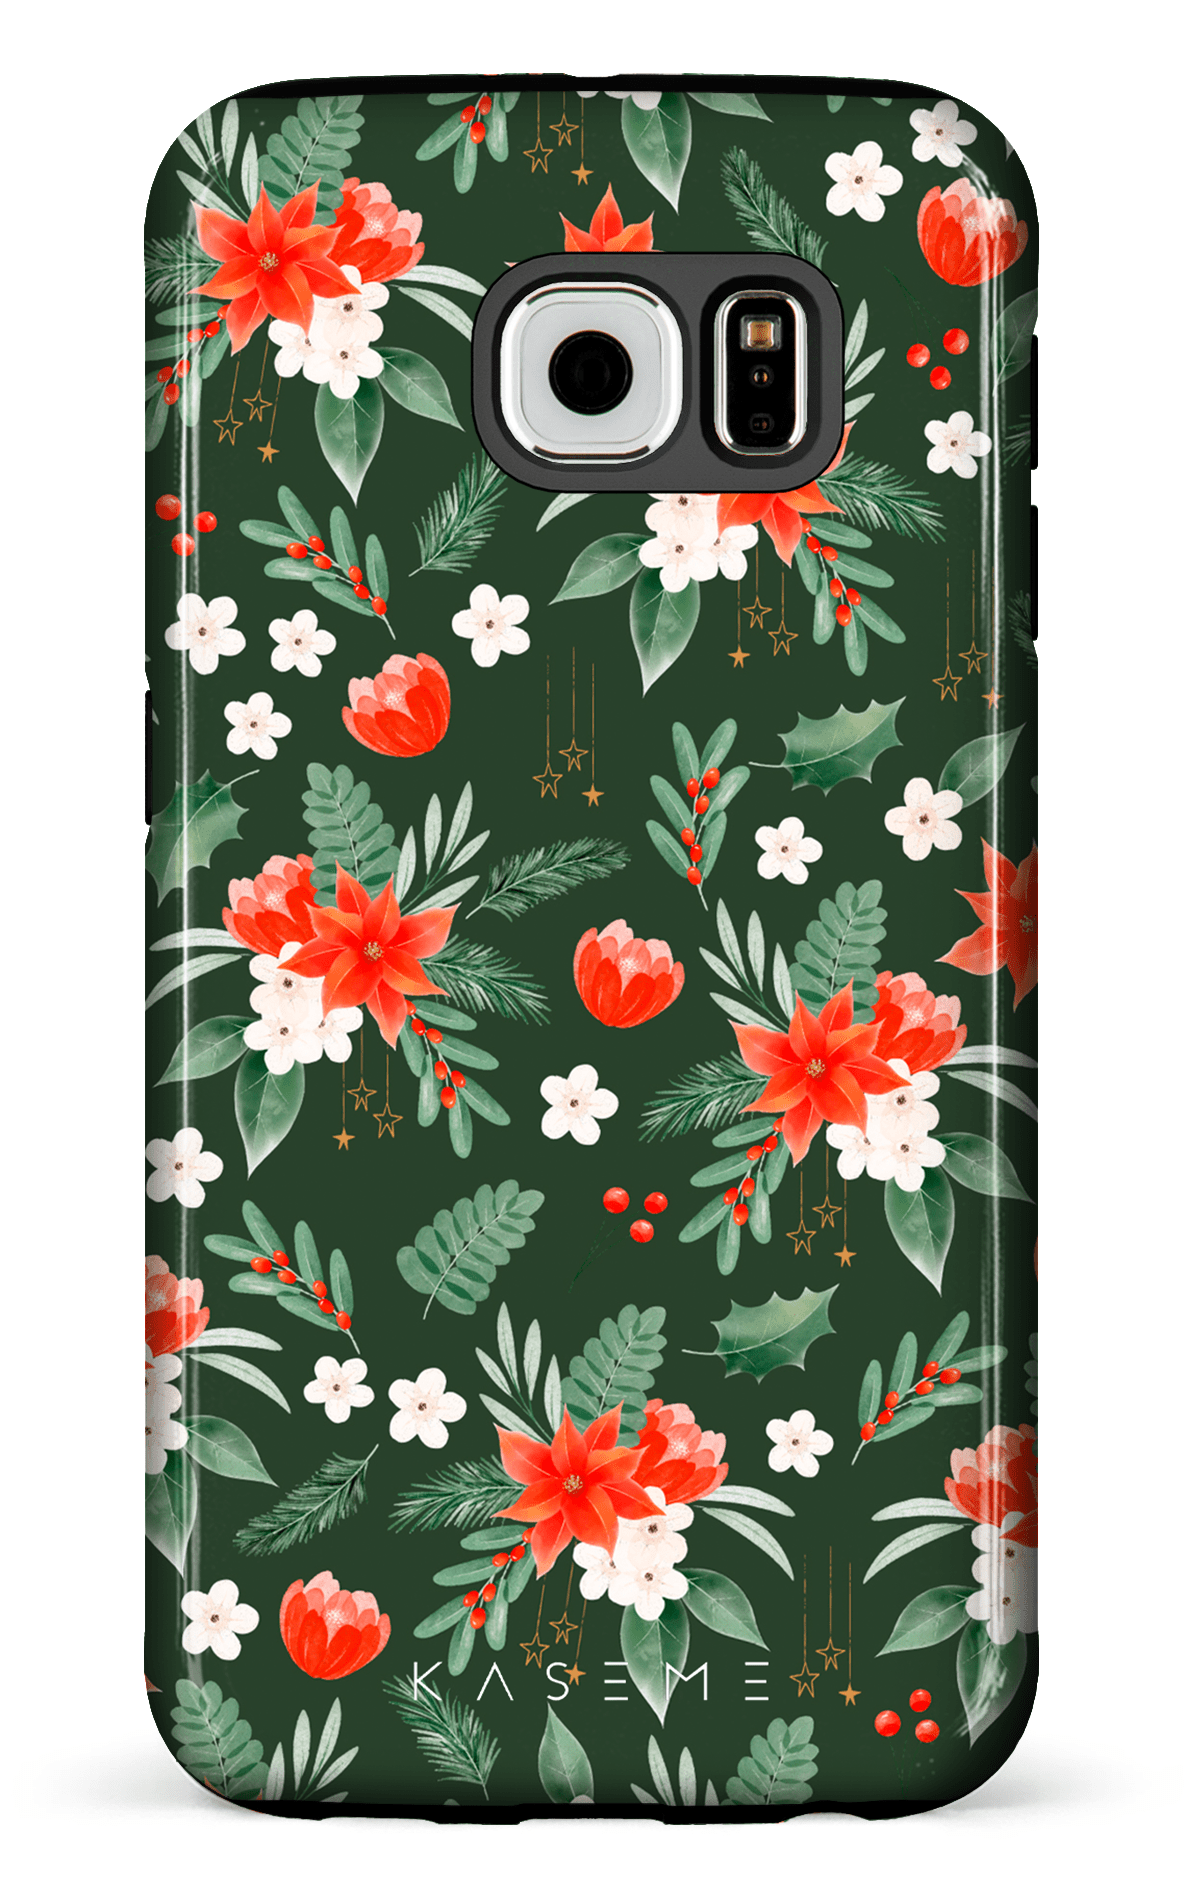 Poinsettia - Galaxy S6